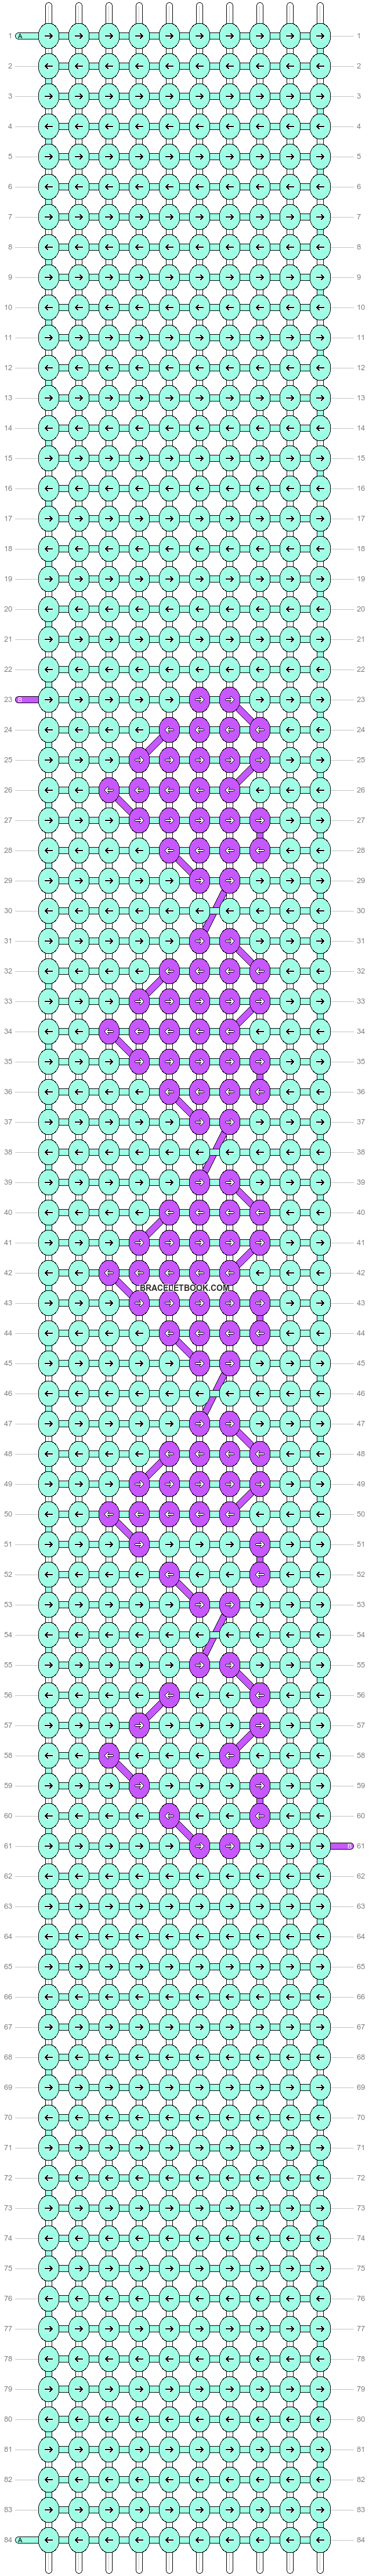 Alpha pattern #17376 variation #86361 pattern